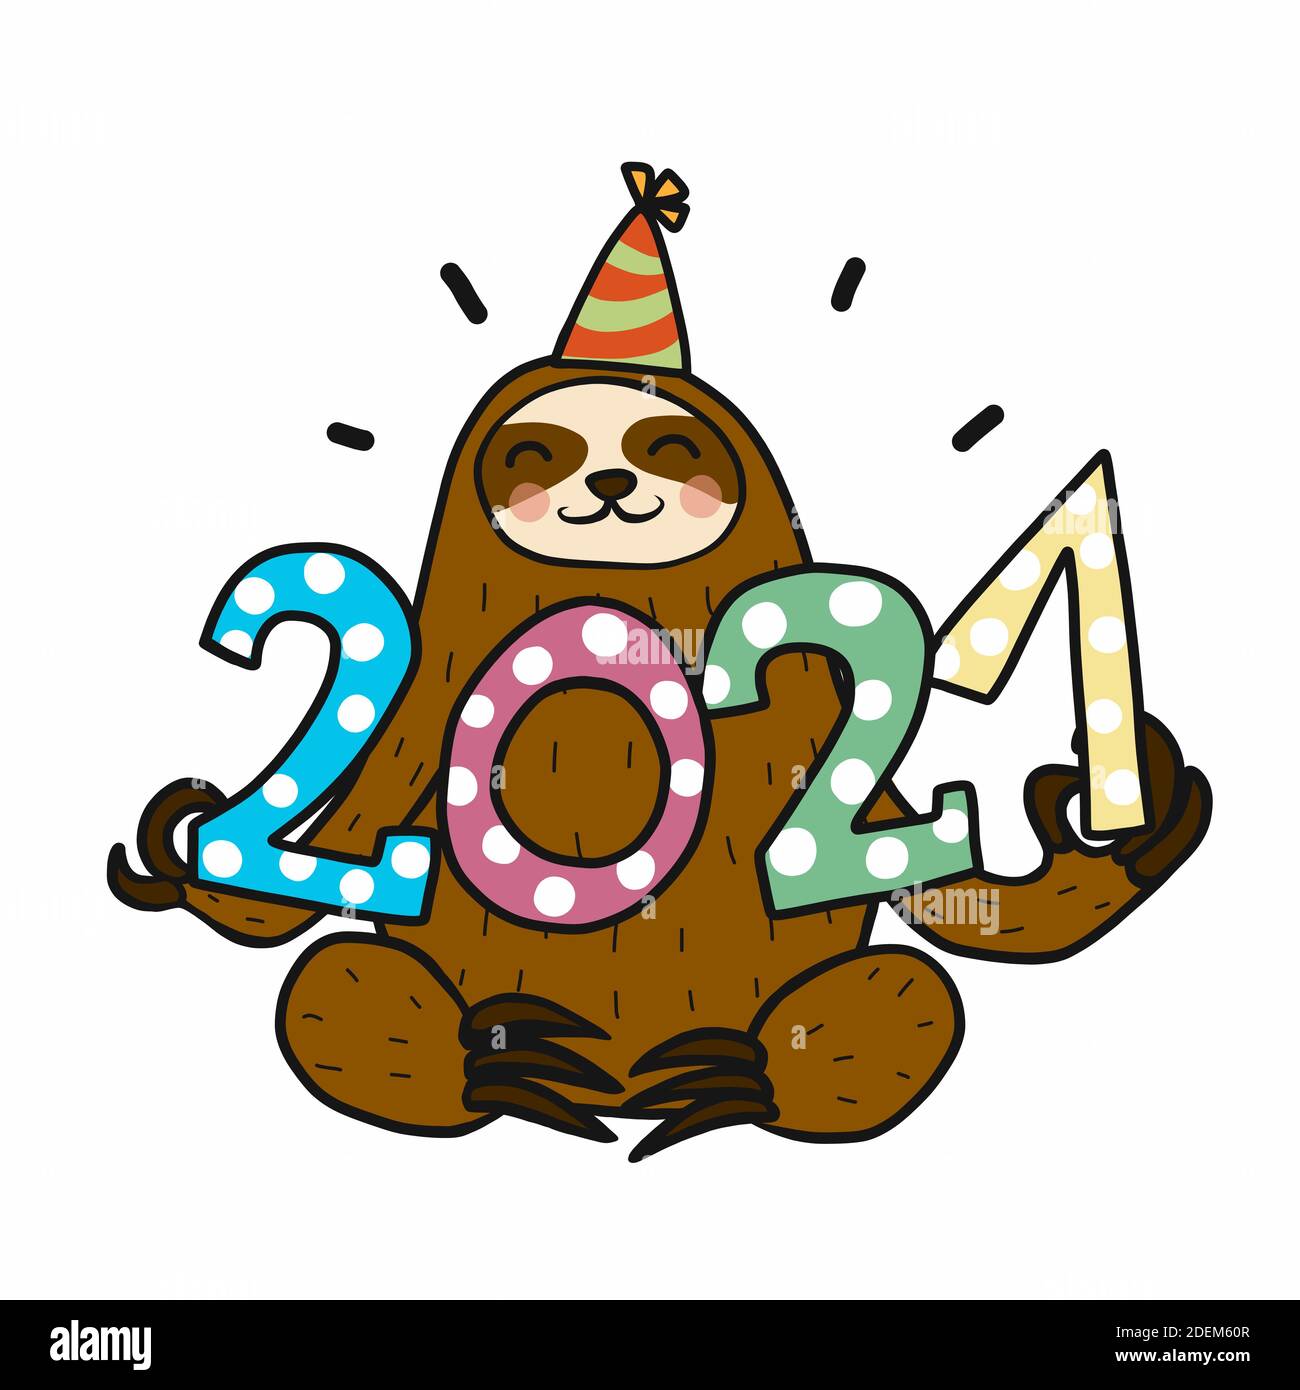 2021 Sloth celebrating new year cartoon vector illustration Stock Vector